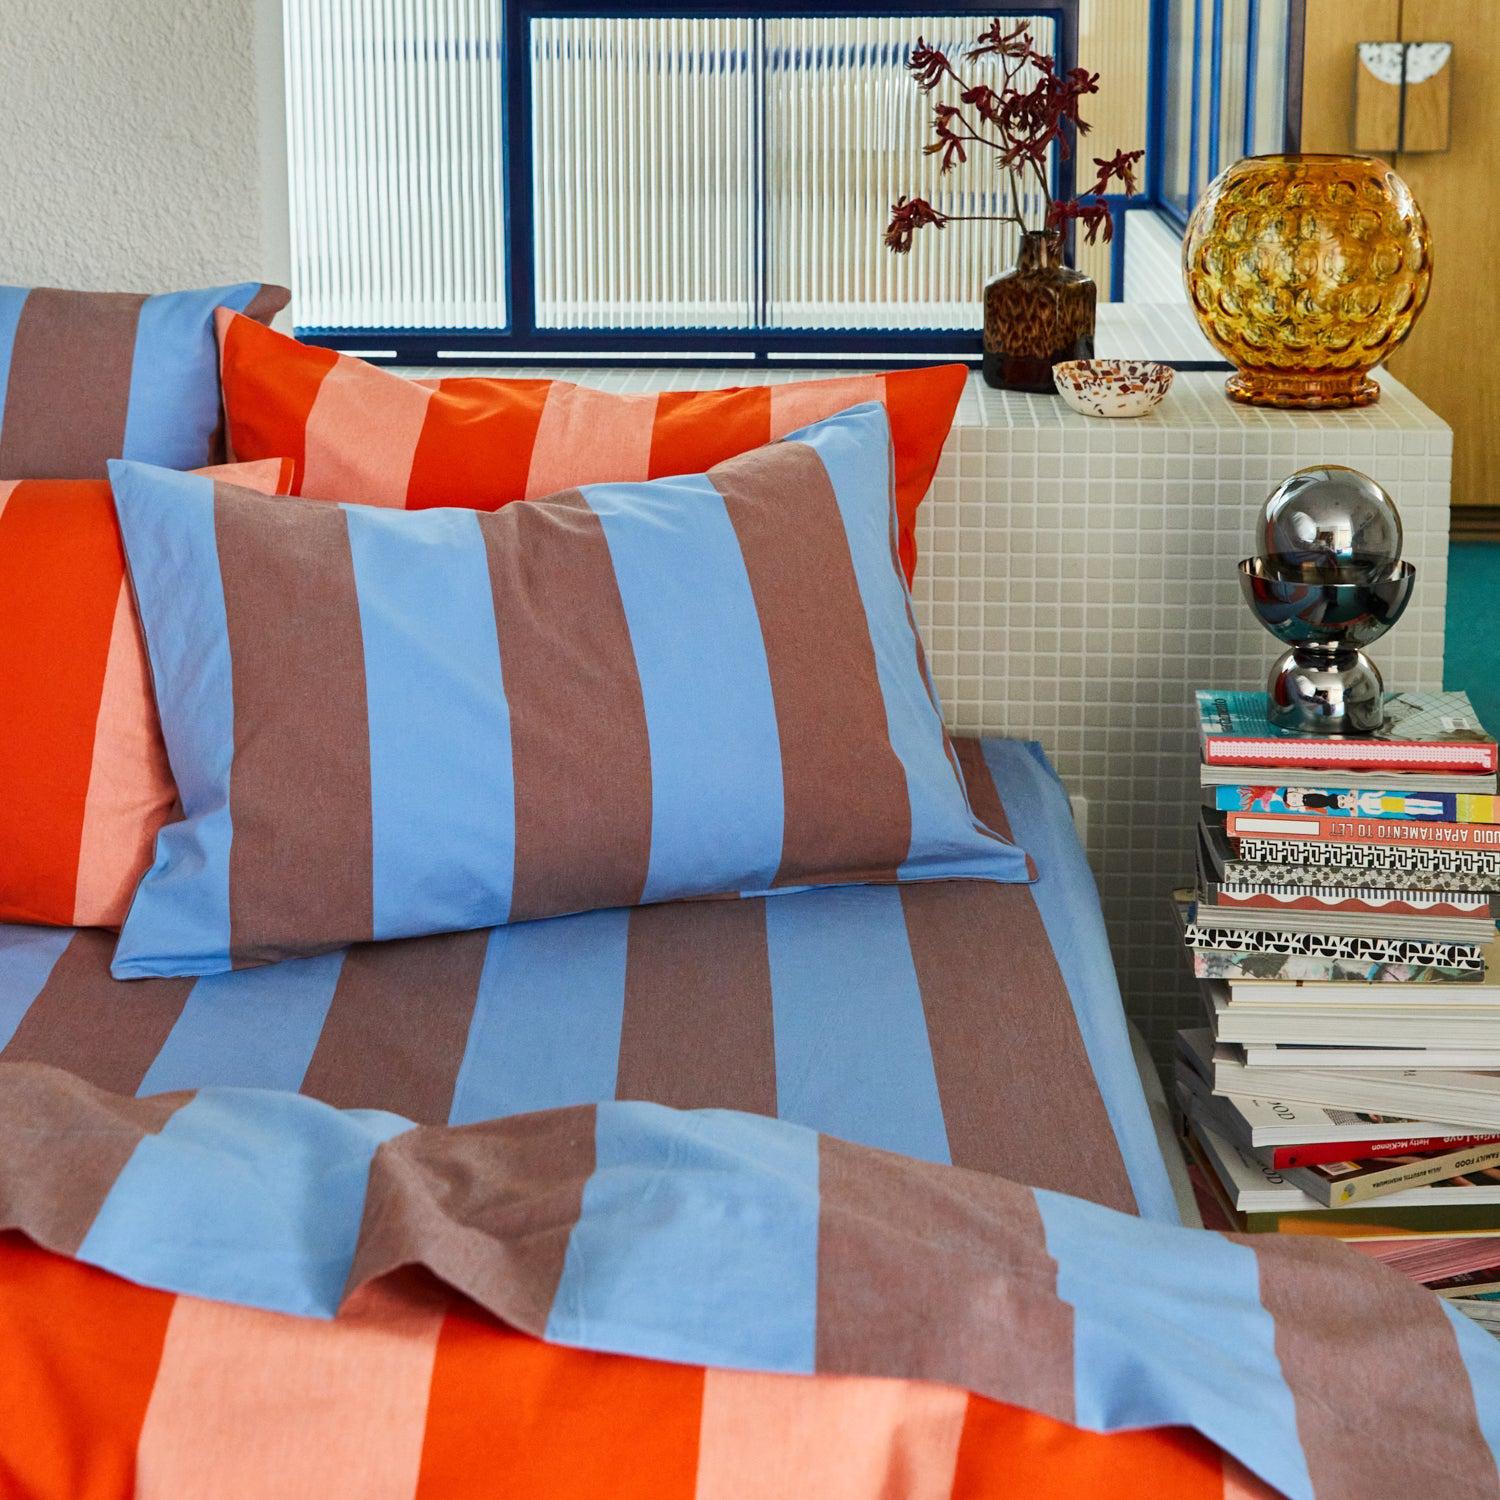 Blanca Cotton Pillowcase Set - Tiramisu - Standard-Soft Furnishings-PLAY by Sage & Clare-The Bay Room